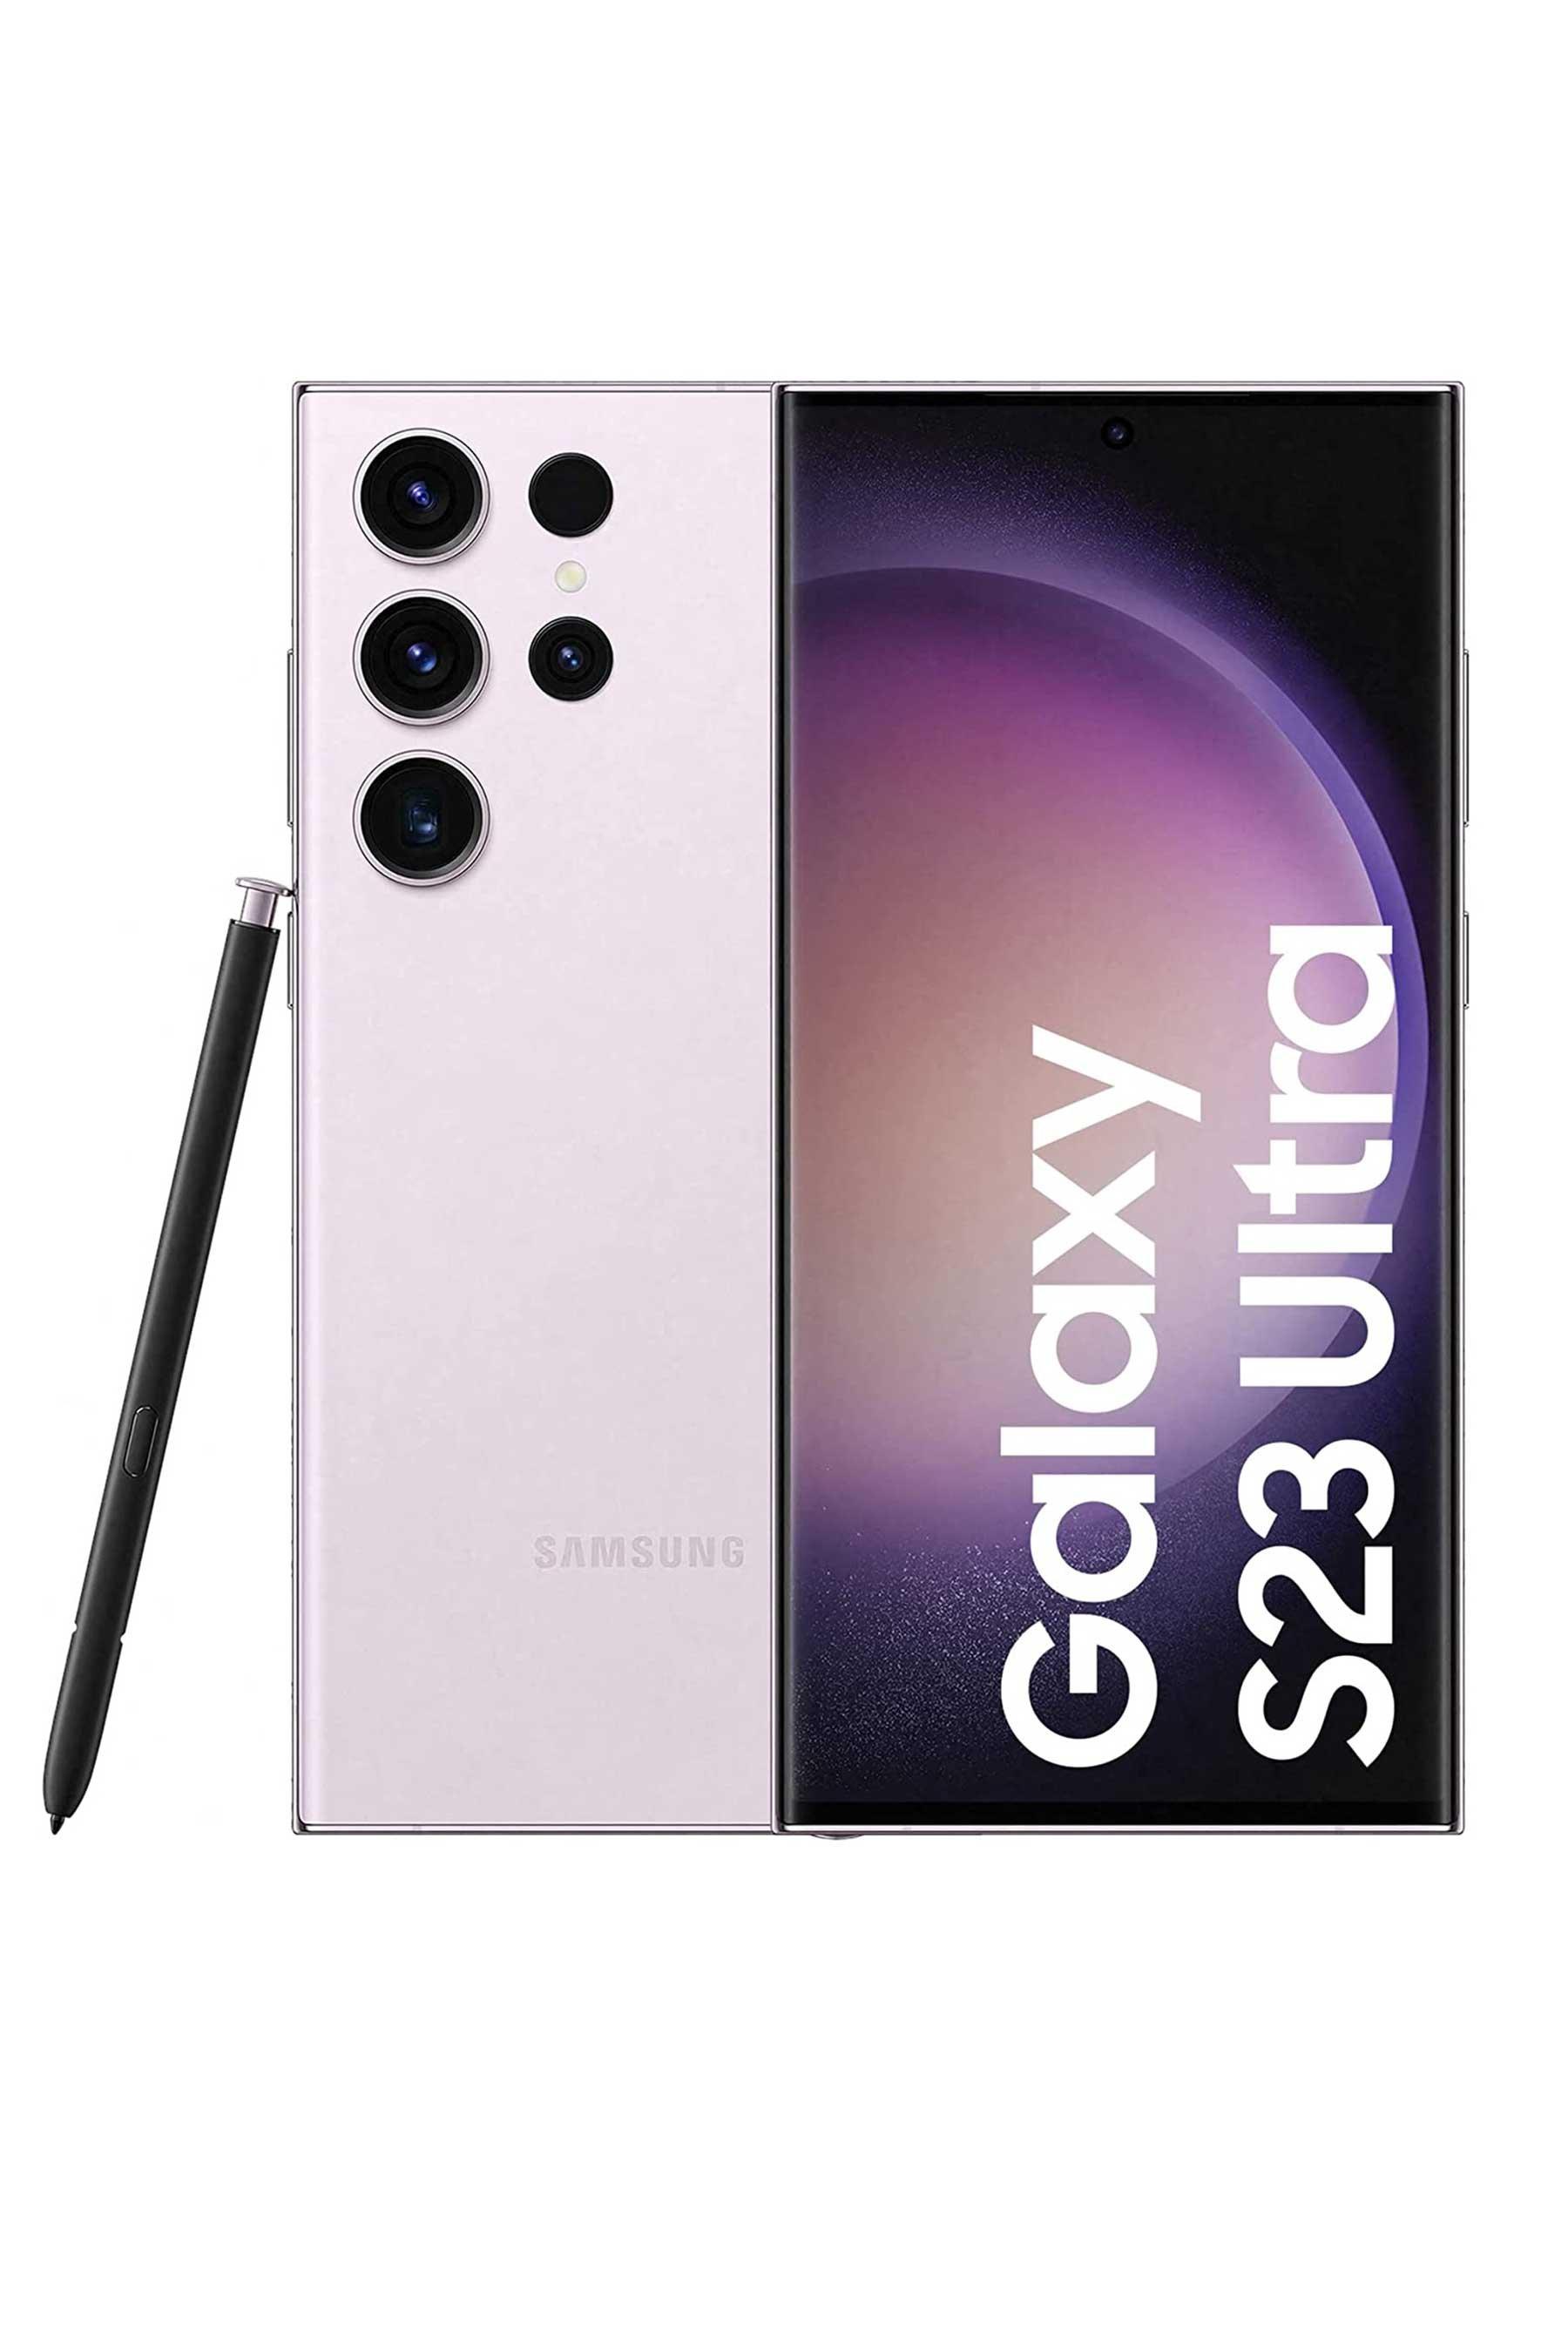 MICHAEL KORS LOGO Samsung Galaxy S23 Ultra Case